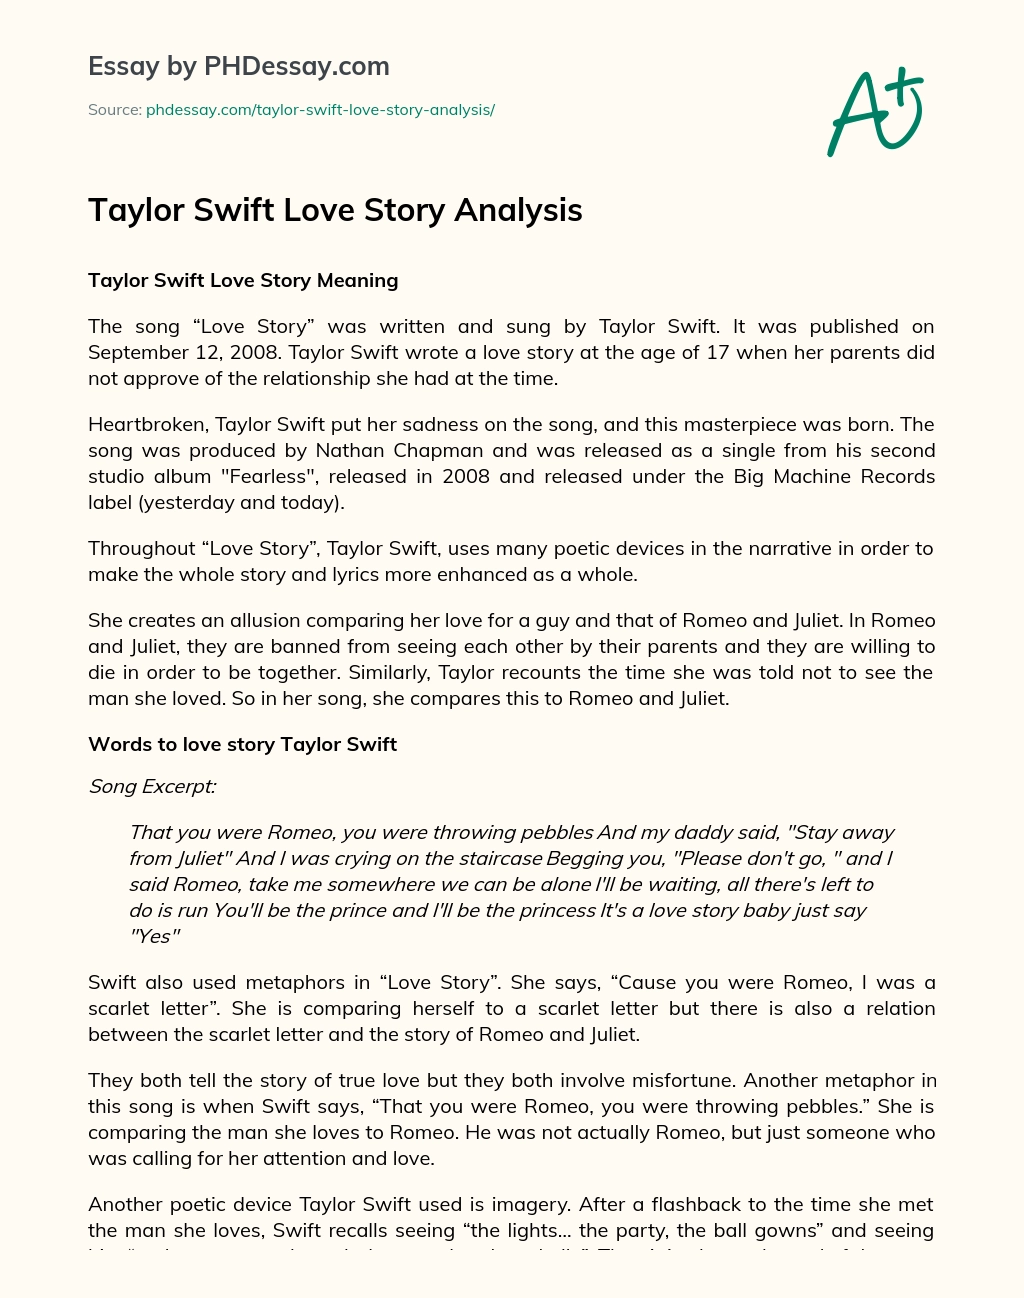 taylor swift lyric analysis essay